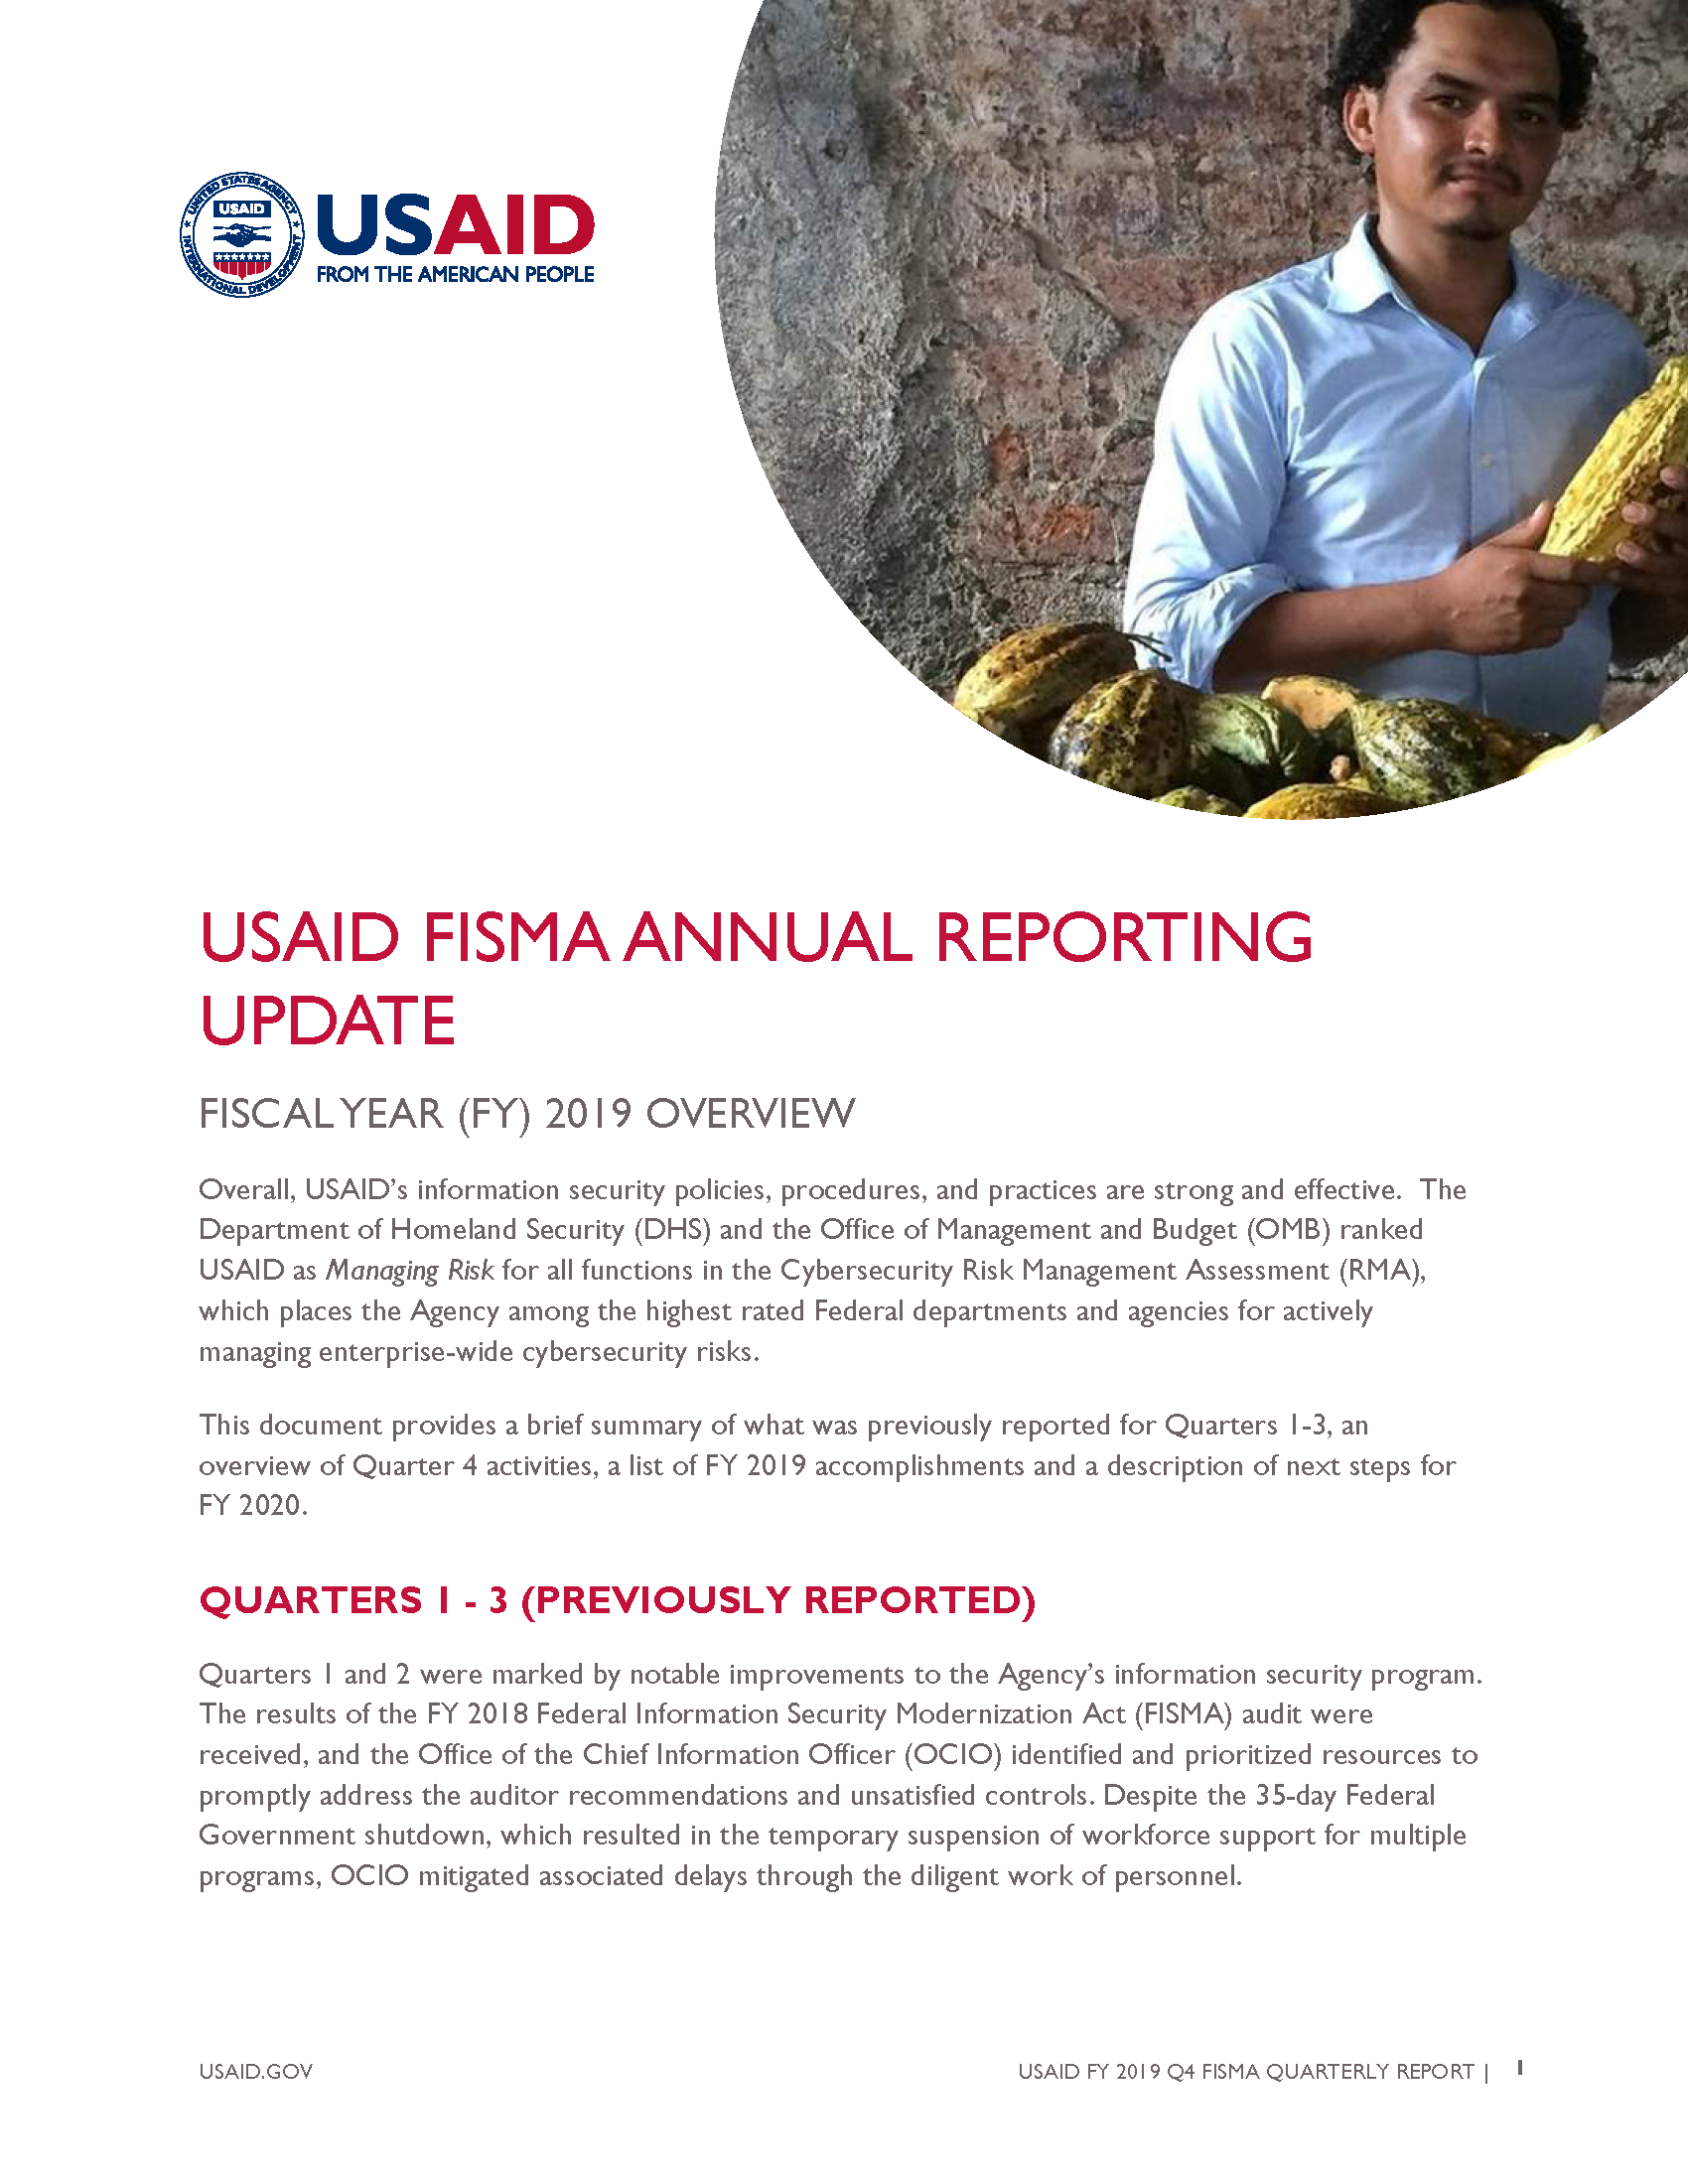 FISMA Quarterly Reporting Update - FY 2019 Quarter 4